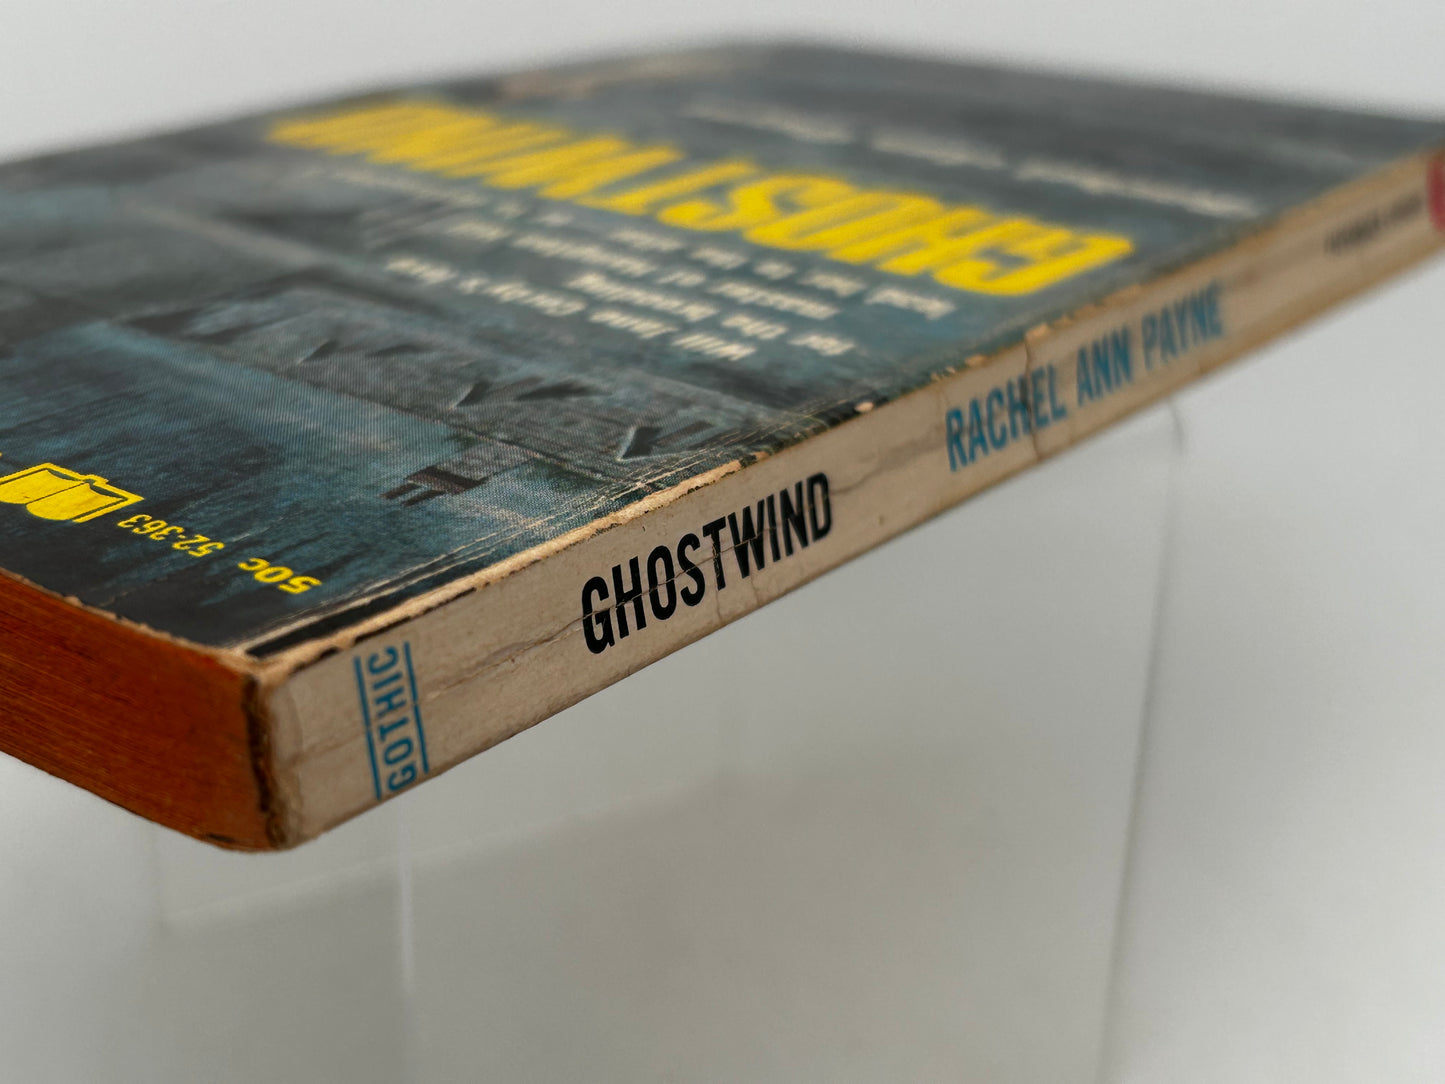 Ghostwind PAPERBACK LIBRARY Paperback Rachel Ann Payne SF11